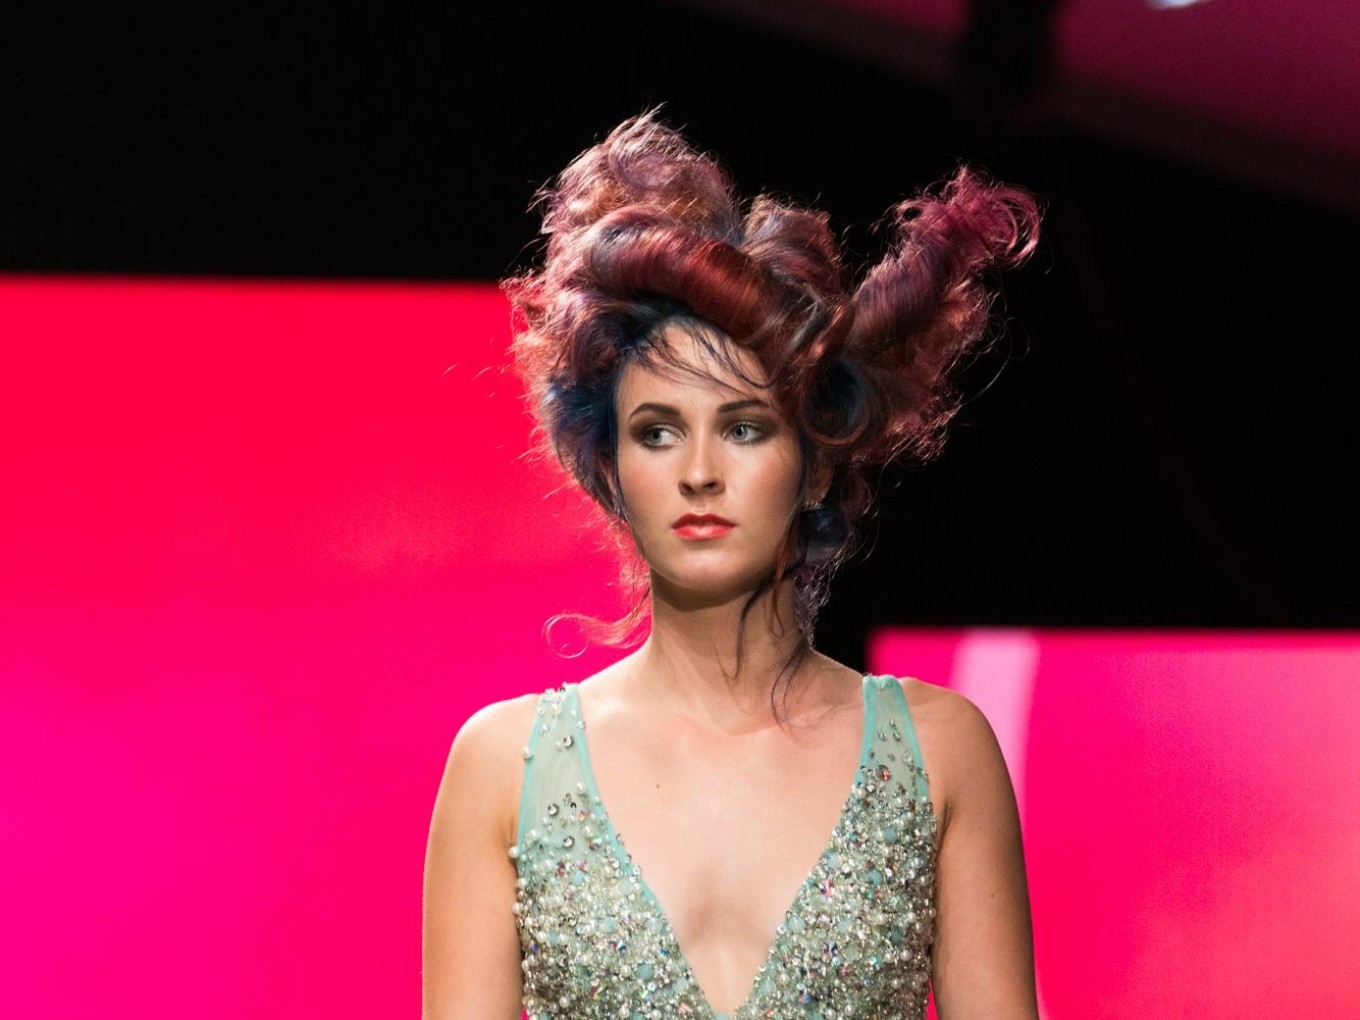 Salon Images kijkt terug op ‘fantastisch weekend’ op Amsterdam Fashion Week